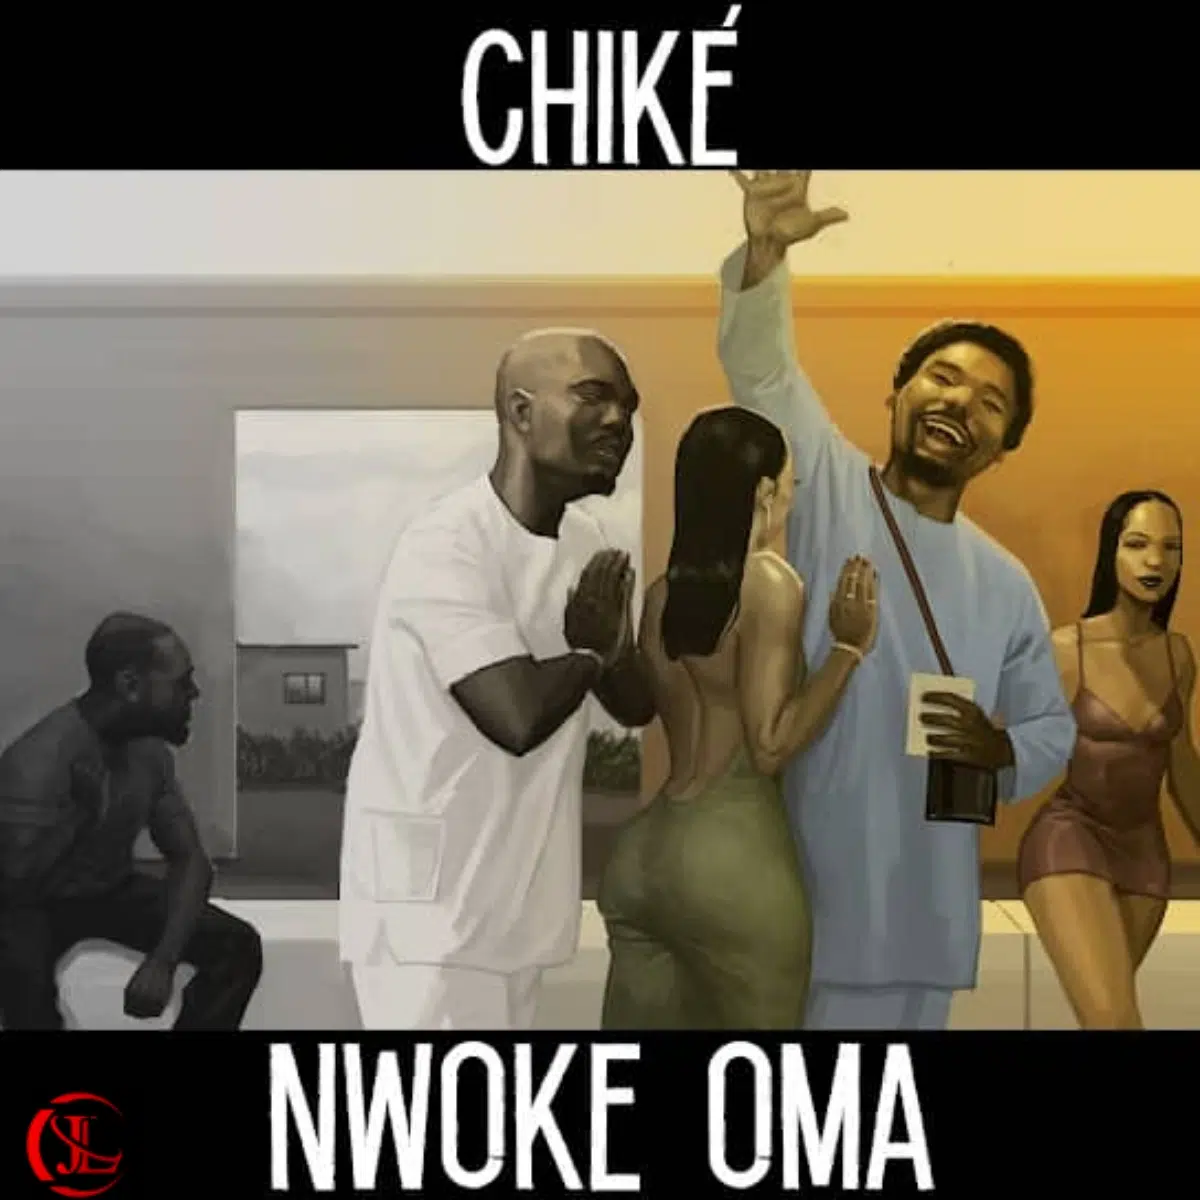 DOWNLOAD: Chike – “Nwoke Oma” Mp3